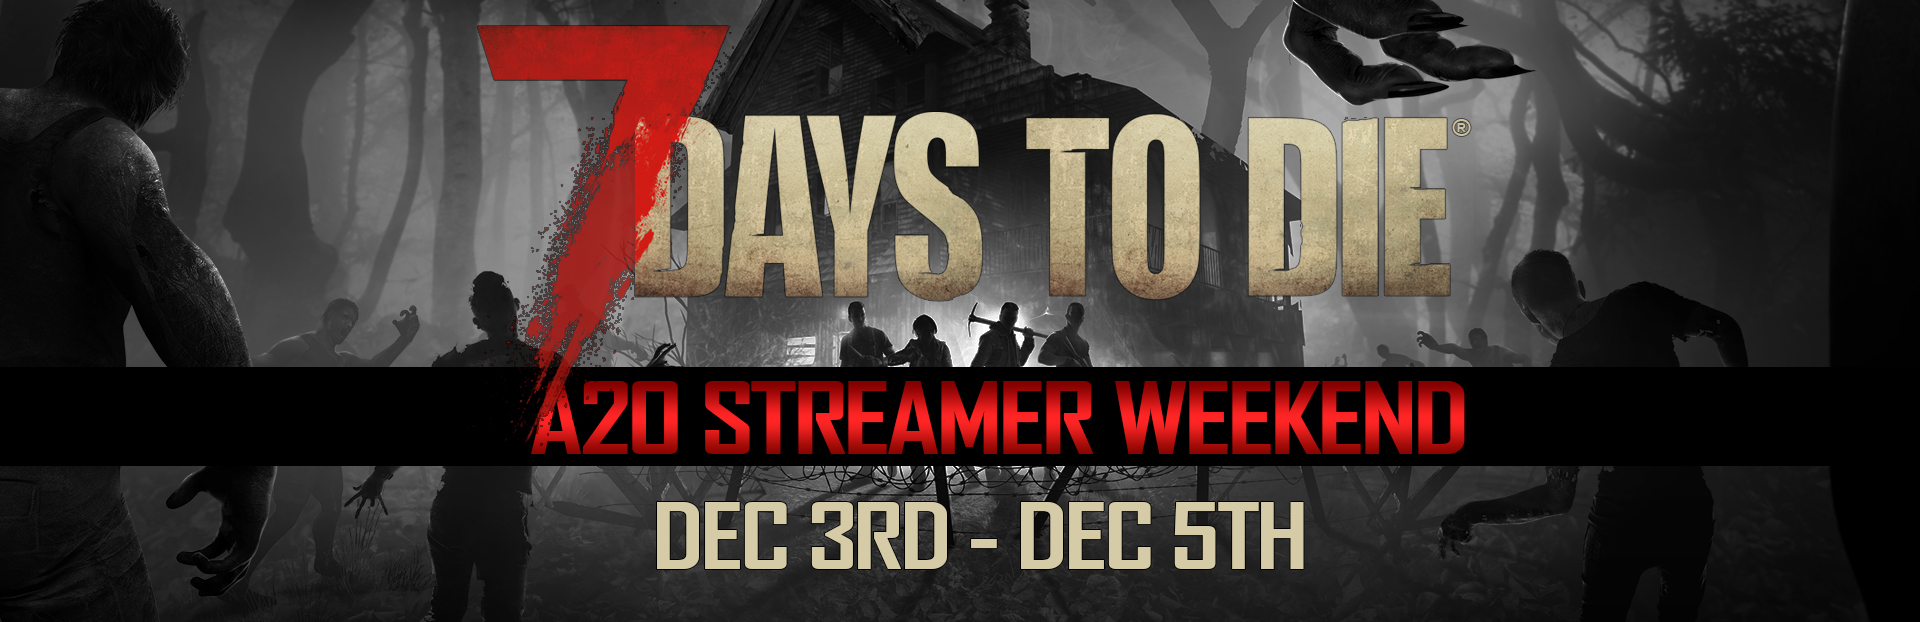 A20 Streamer Weekend | 7 Days to Die